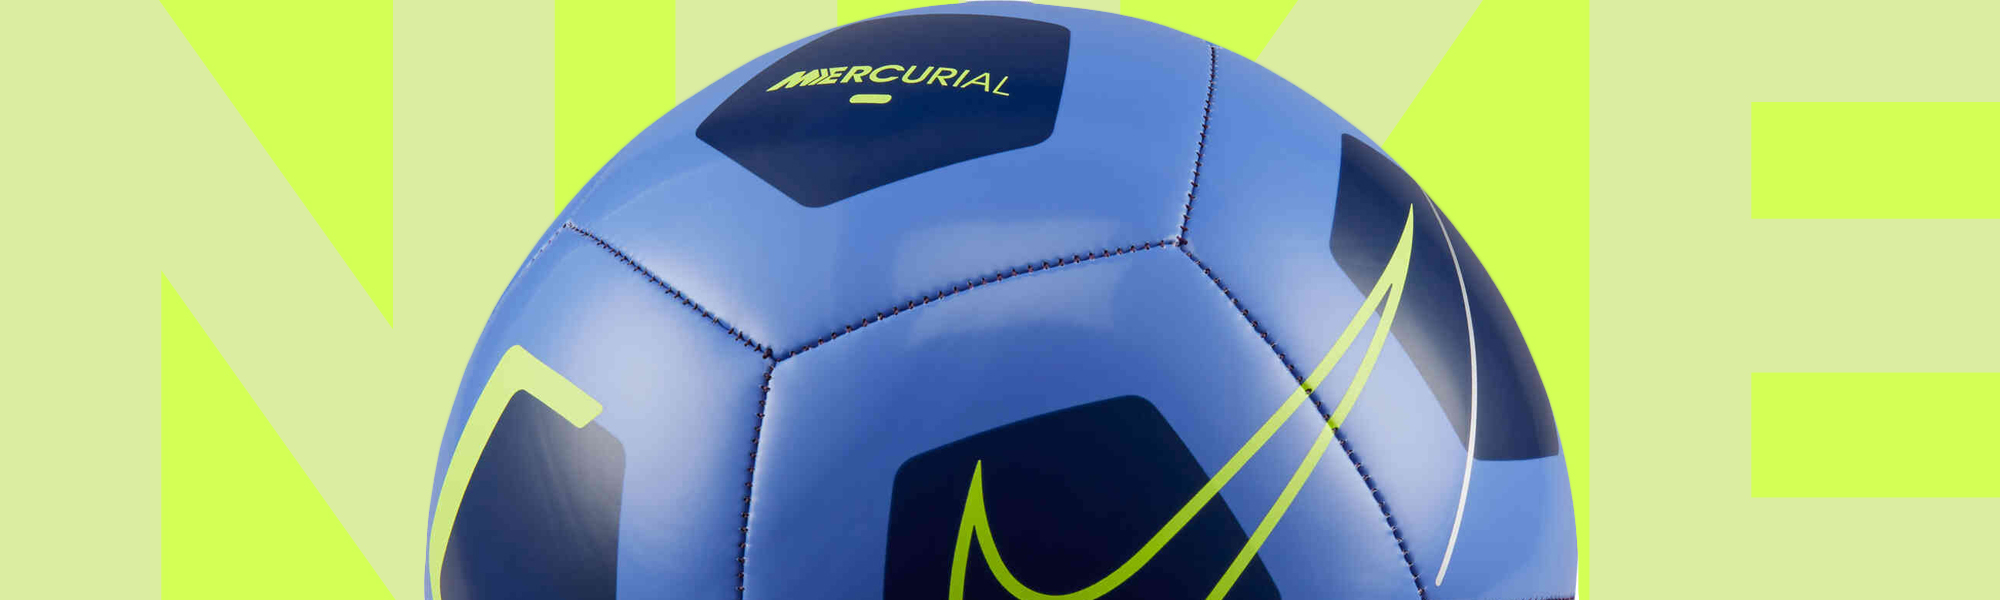 Nike Flight Premium Match Soccer Ball - White & Black with Laser Orange -  SoccerPro